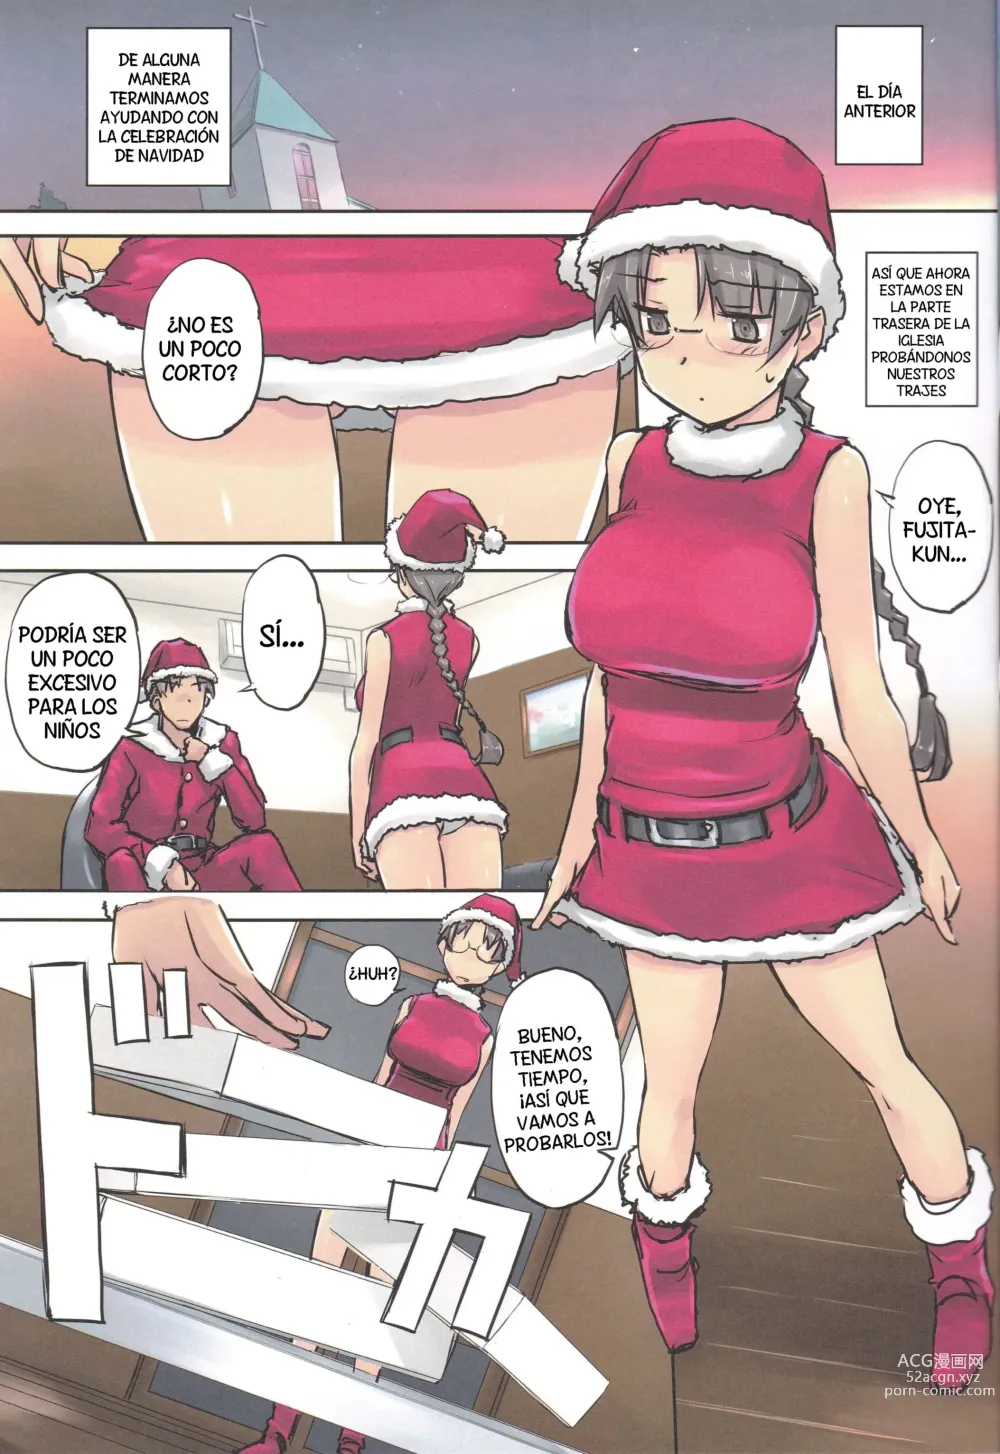 Page 4 of doujinshi ¡Ya se Viene Santa Claus!